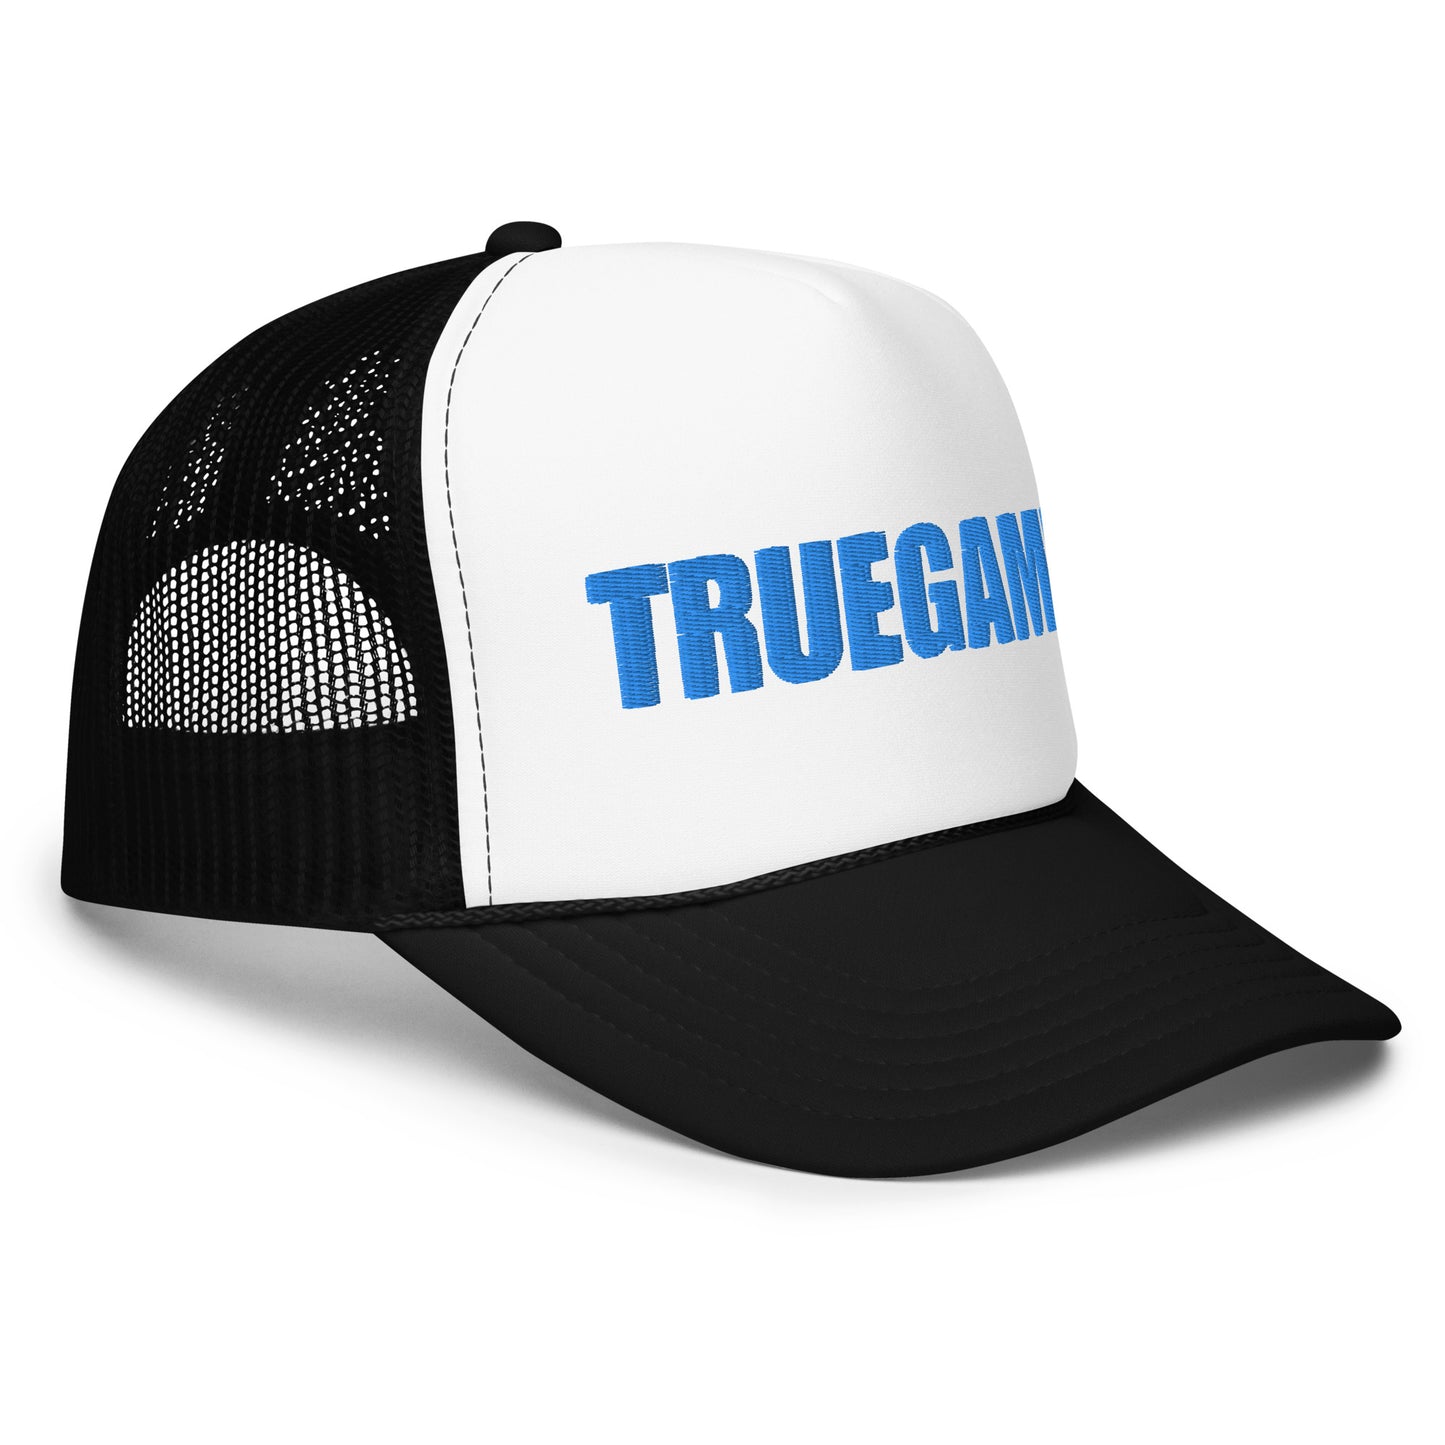 Black and White True Game Trucker w/ Blue Logo